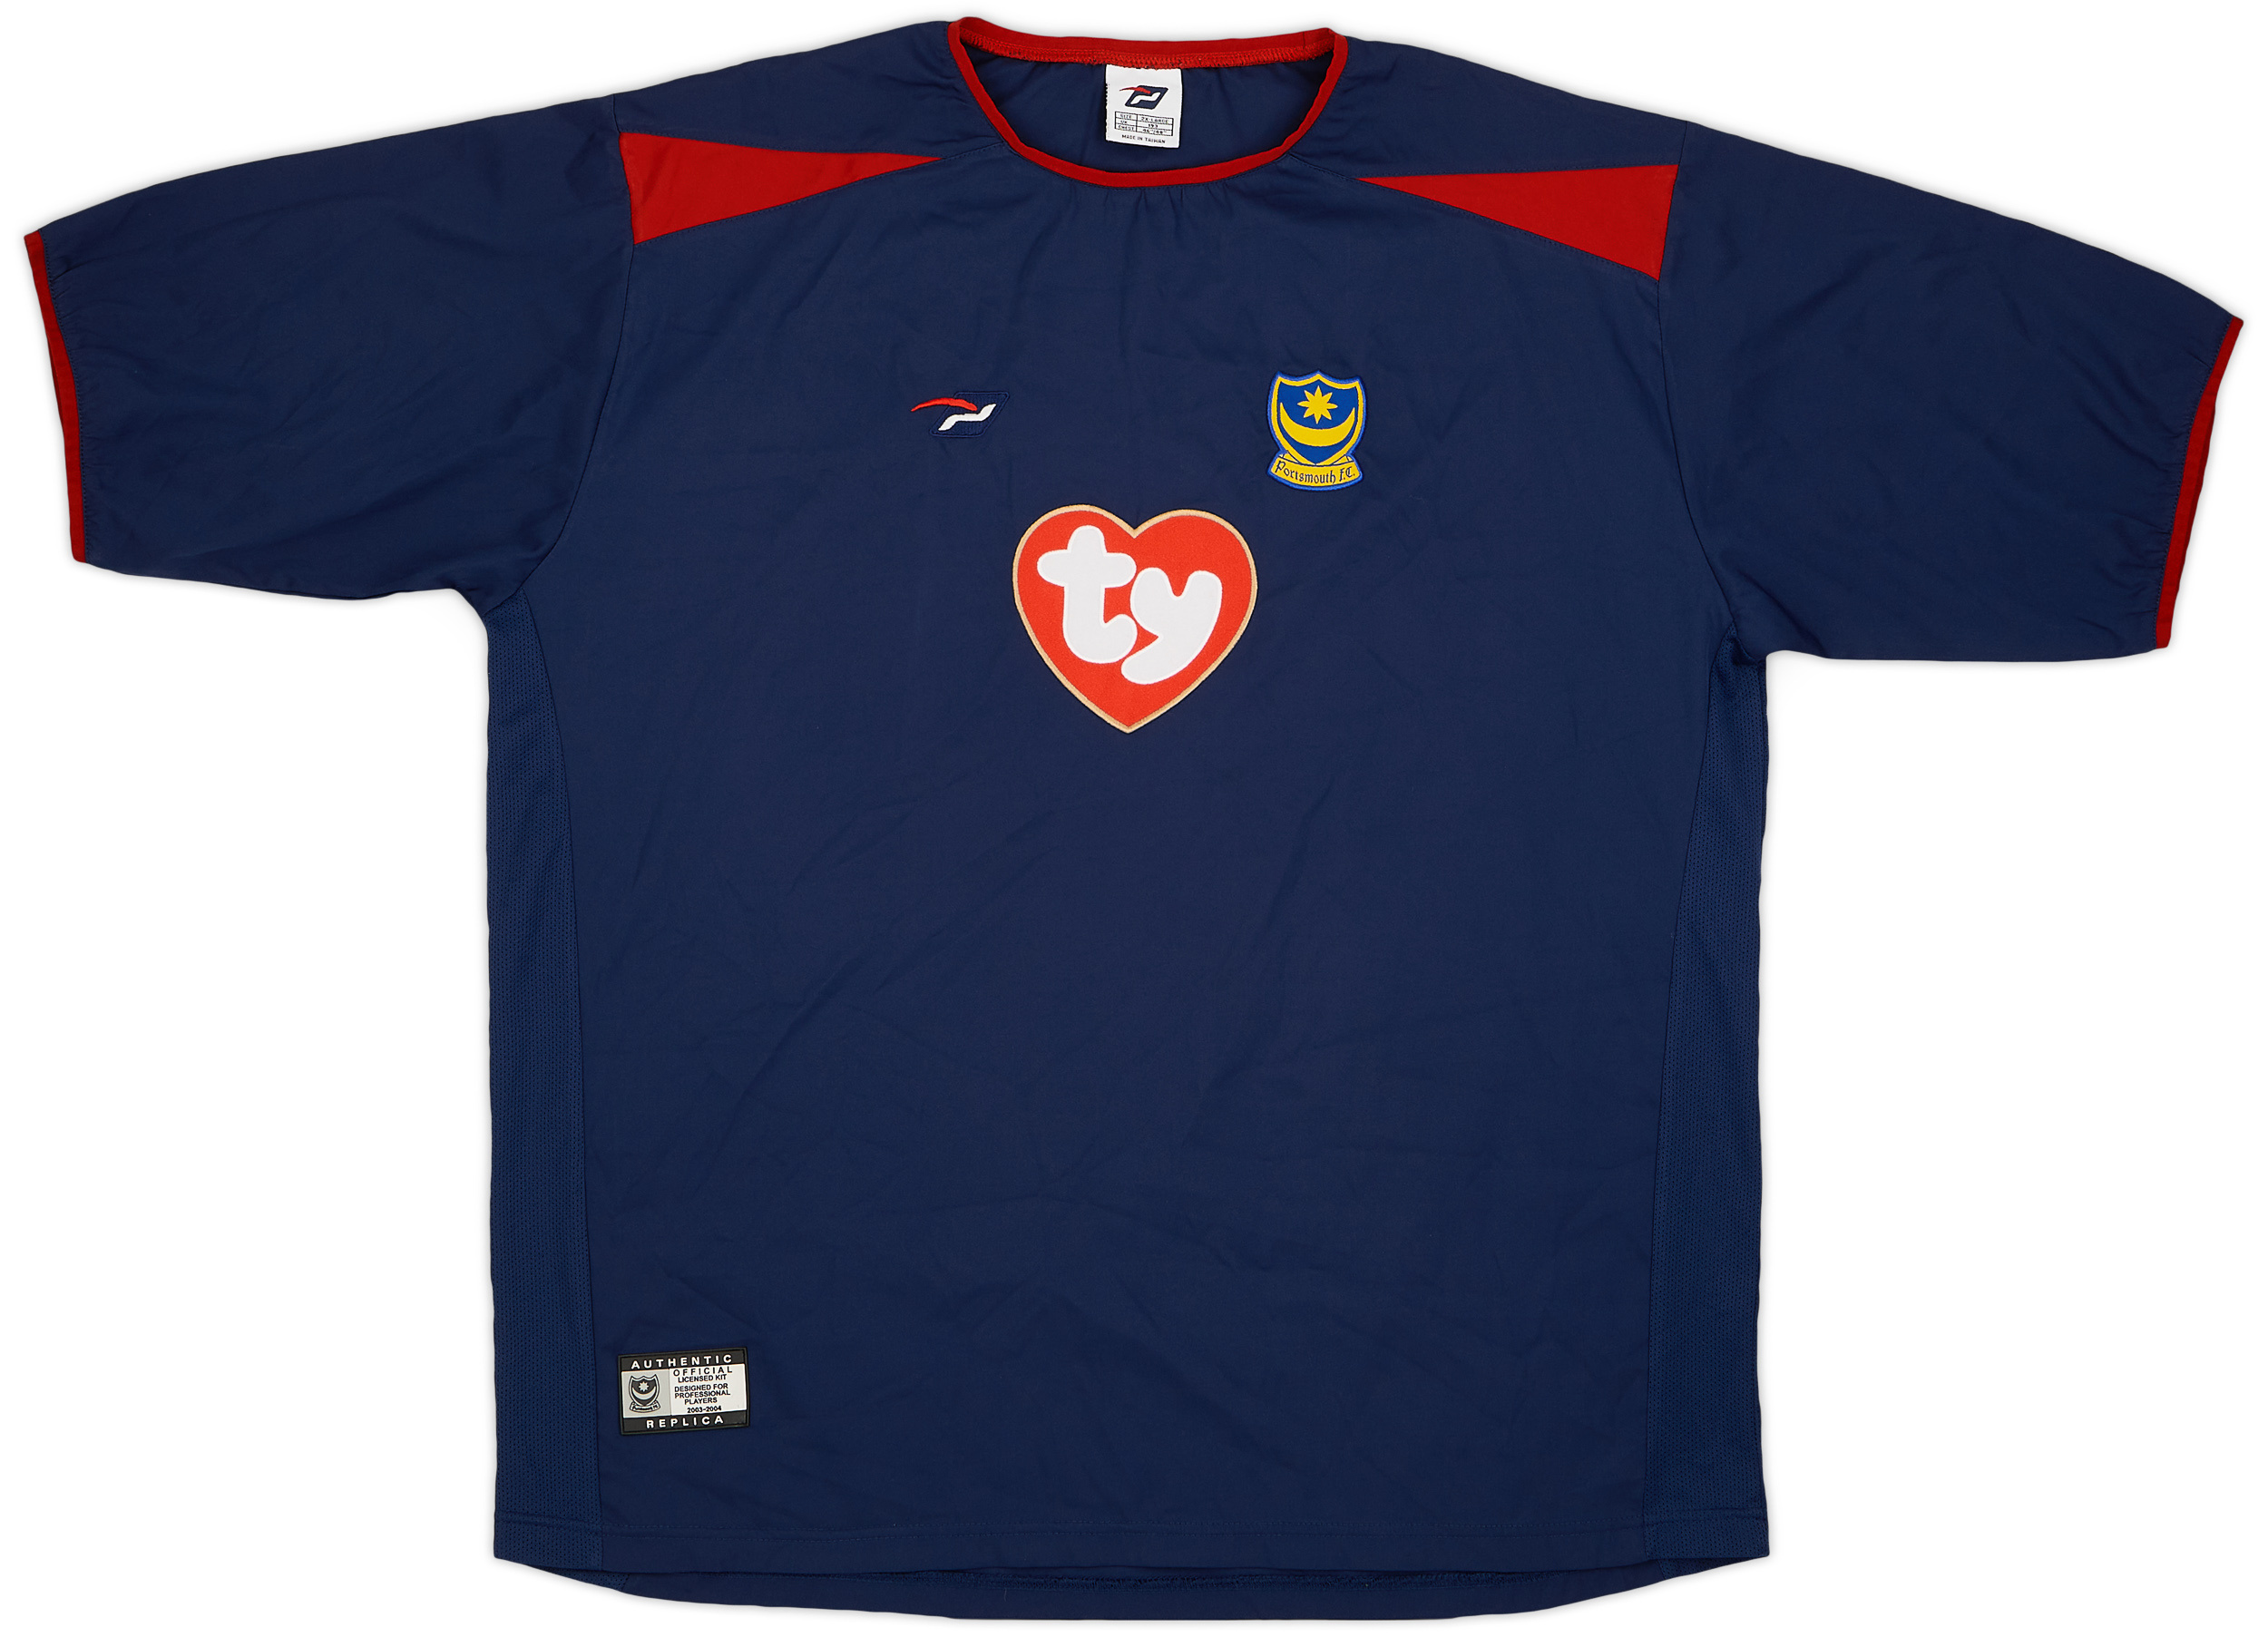 2003-04 Portsmouth Away Shirt - 9/10 - ()